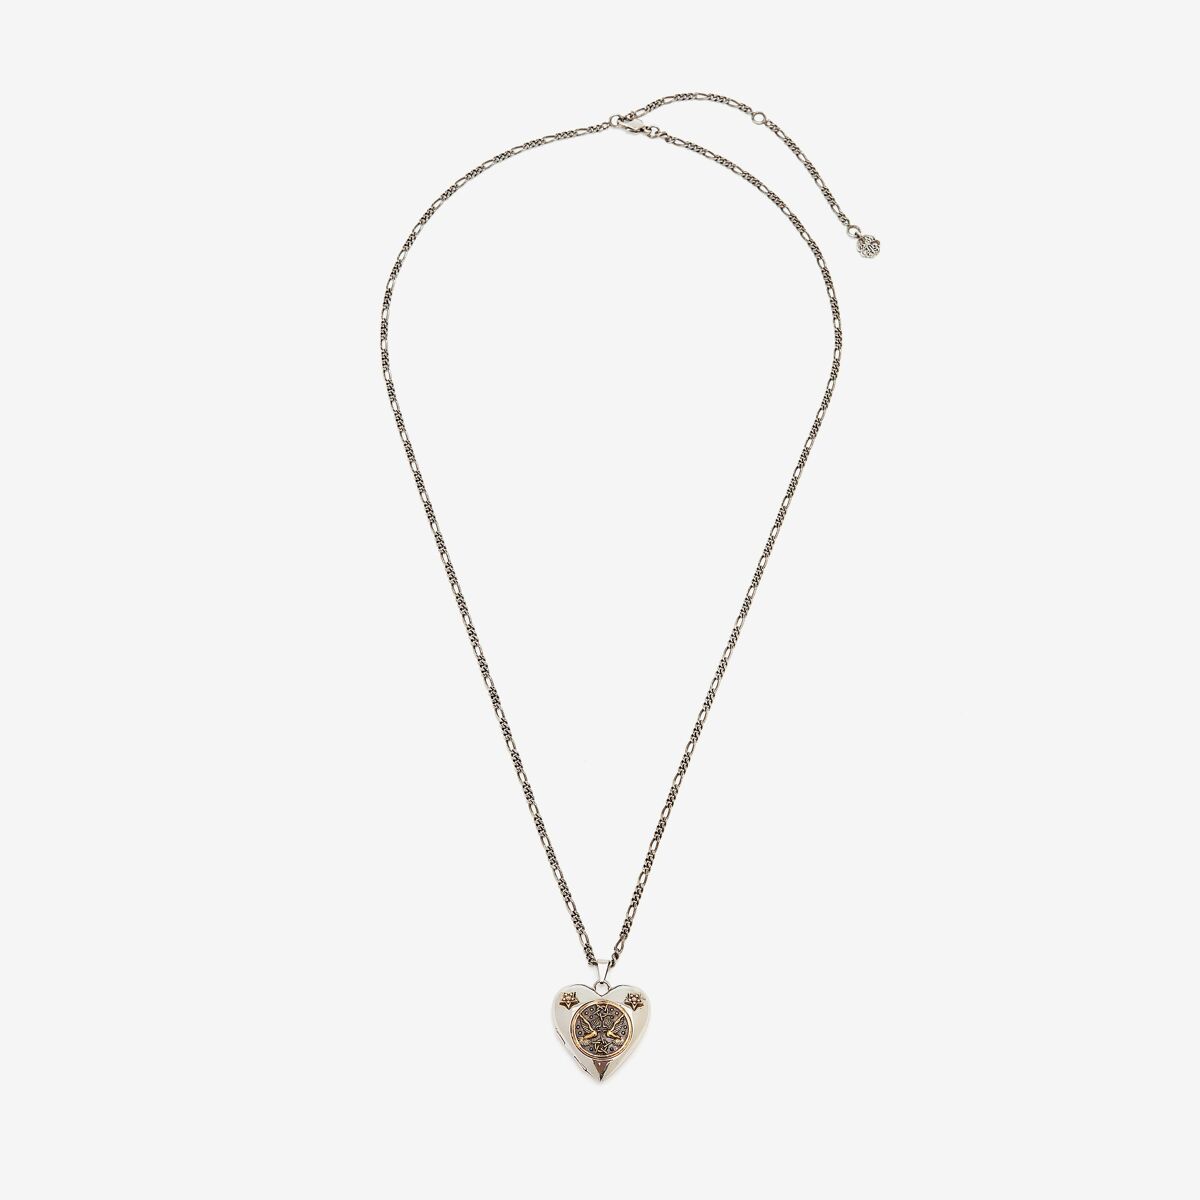 ALEXANDER MCQUEEN Long Necklace with Heart Pendant